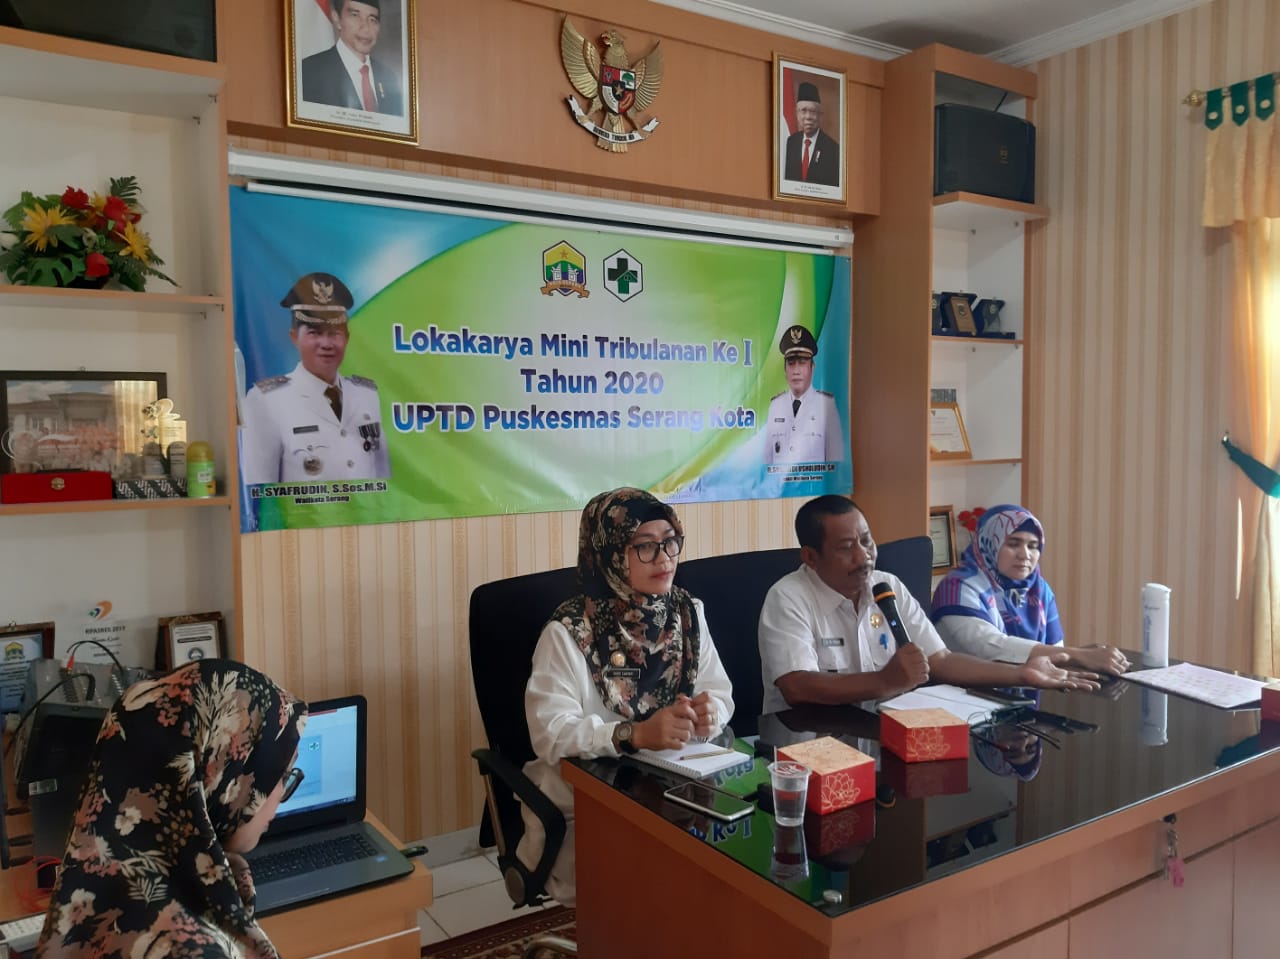 Lokakarya Mini Lintas sektoral Tribulan ke-1 Puskesmas Kota Serang Thn 2020